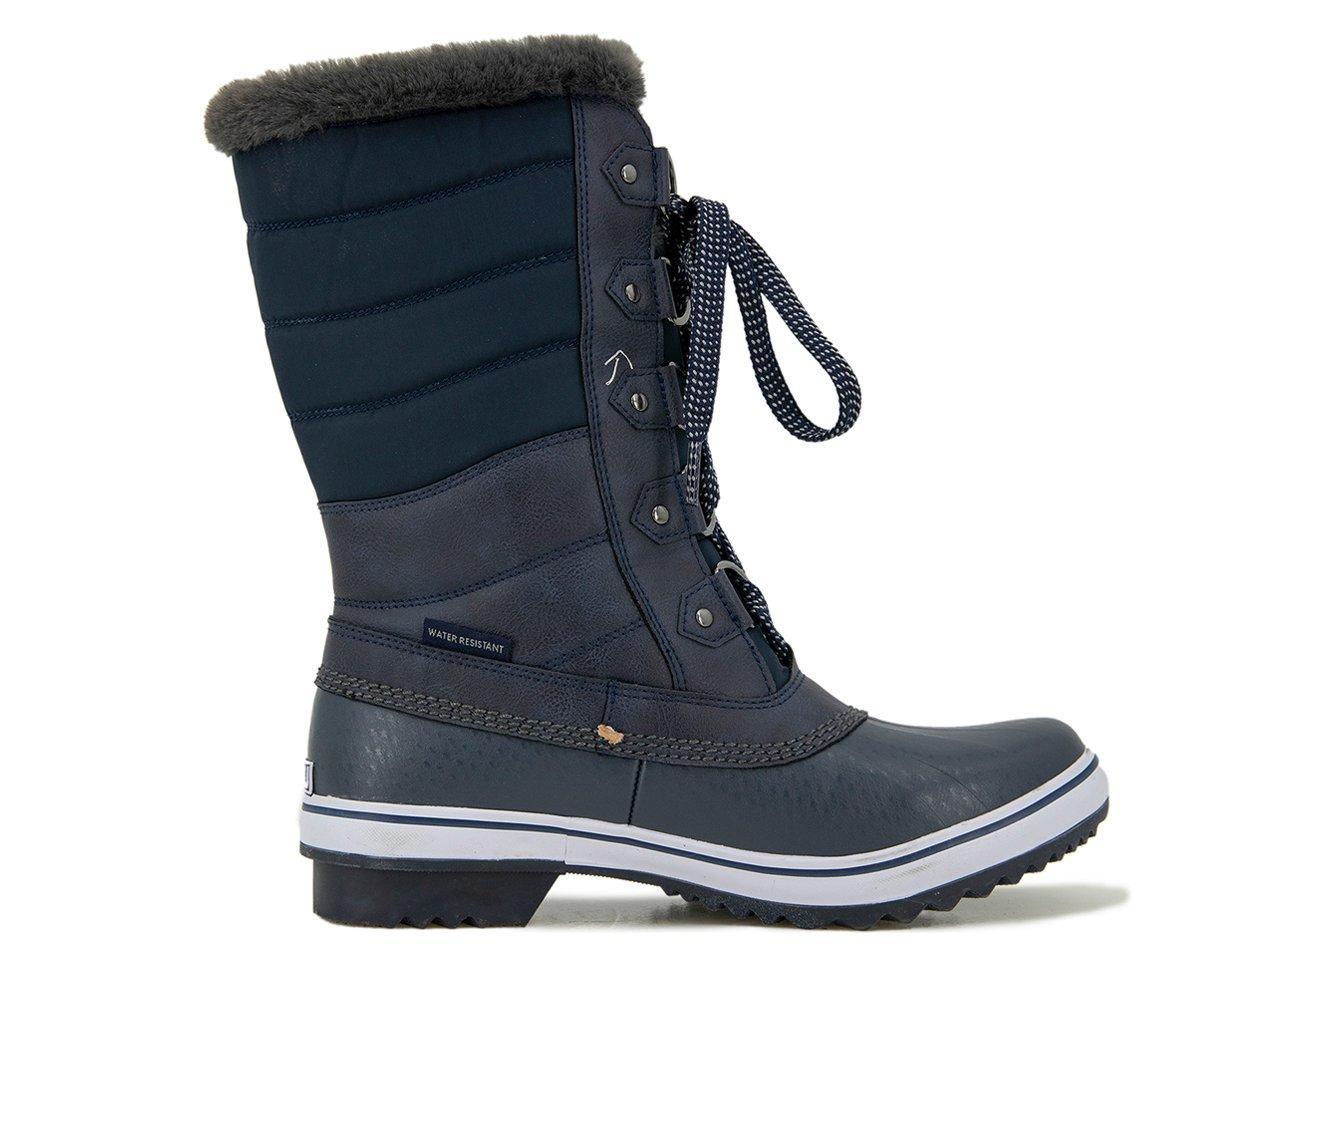 Women's JBU Siberia Water Resistant Mid Calf Winter Boots